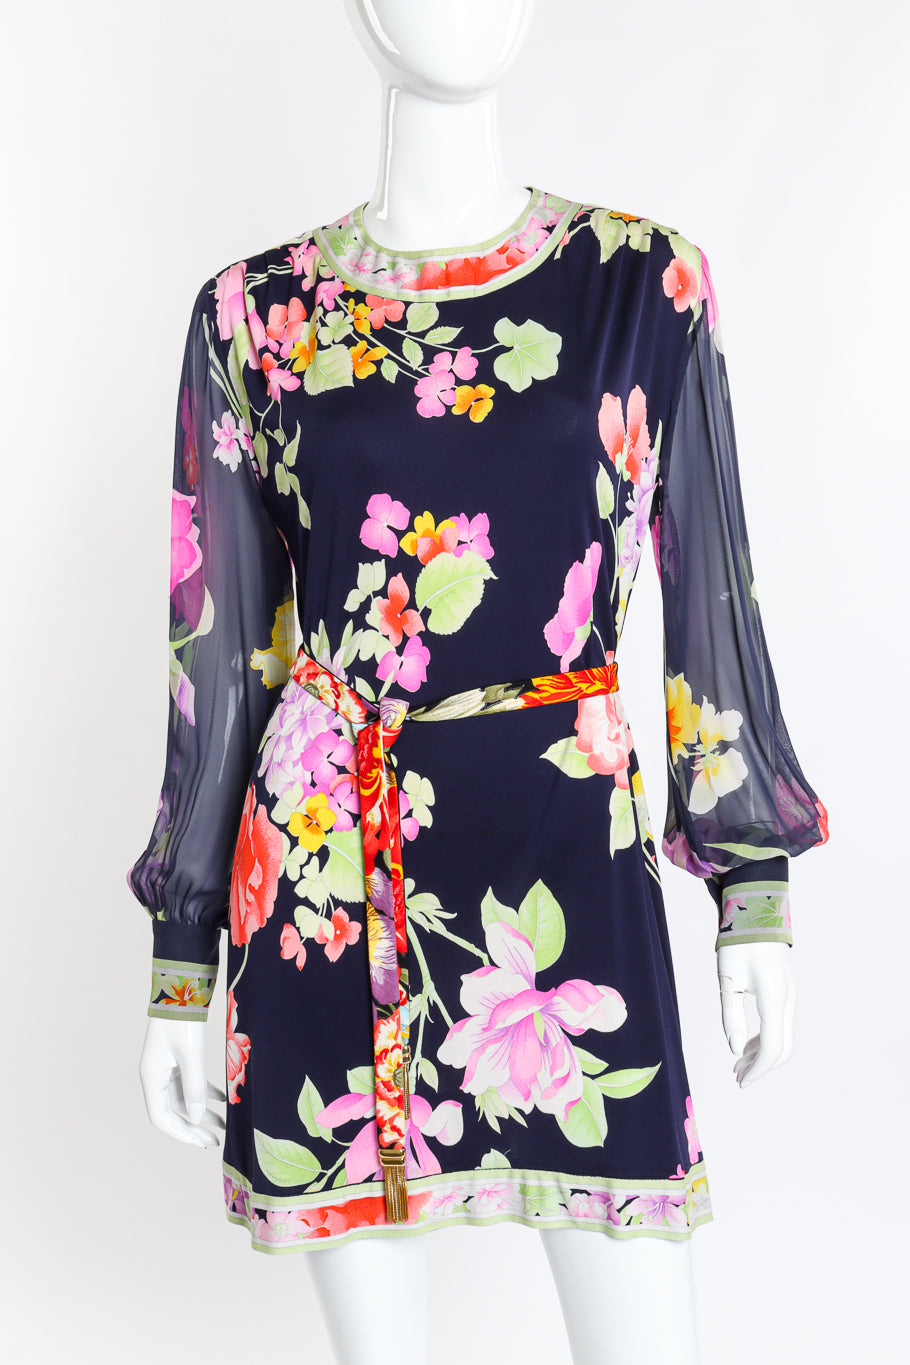 Vintage Leonard Floral Silk Jersey Dress front on mannequin closeup @recess la